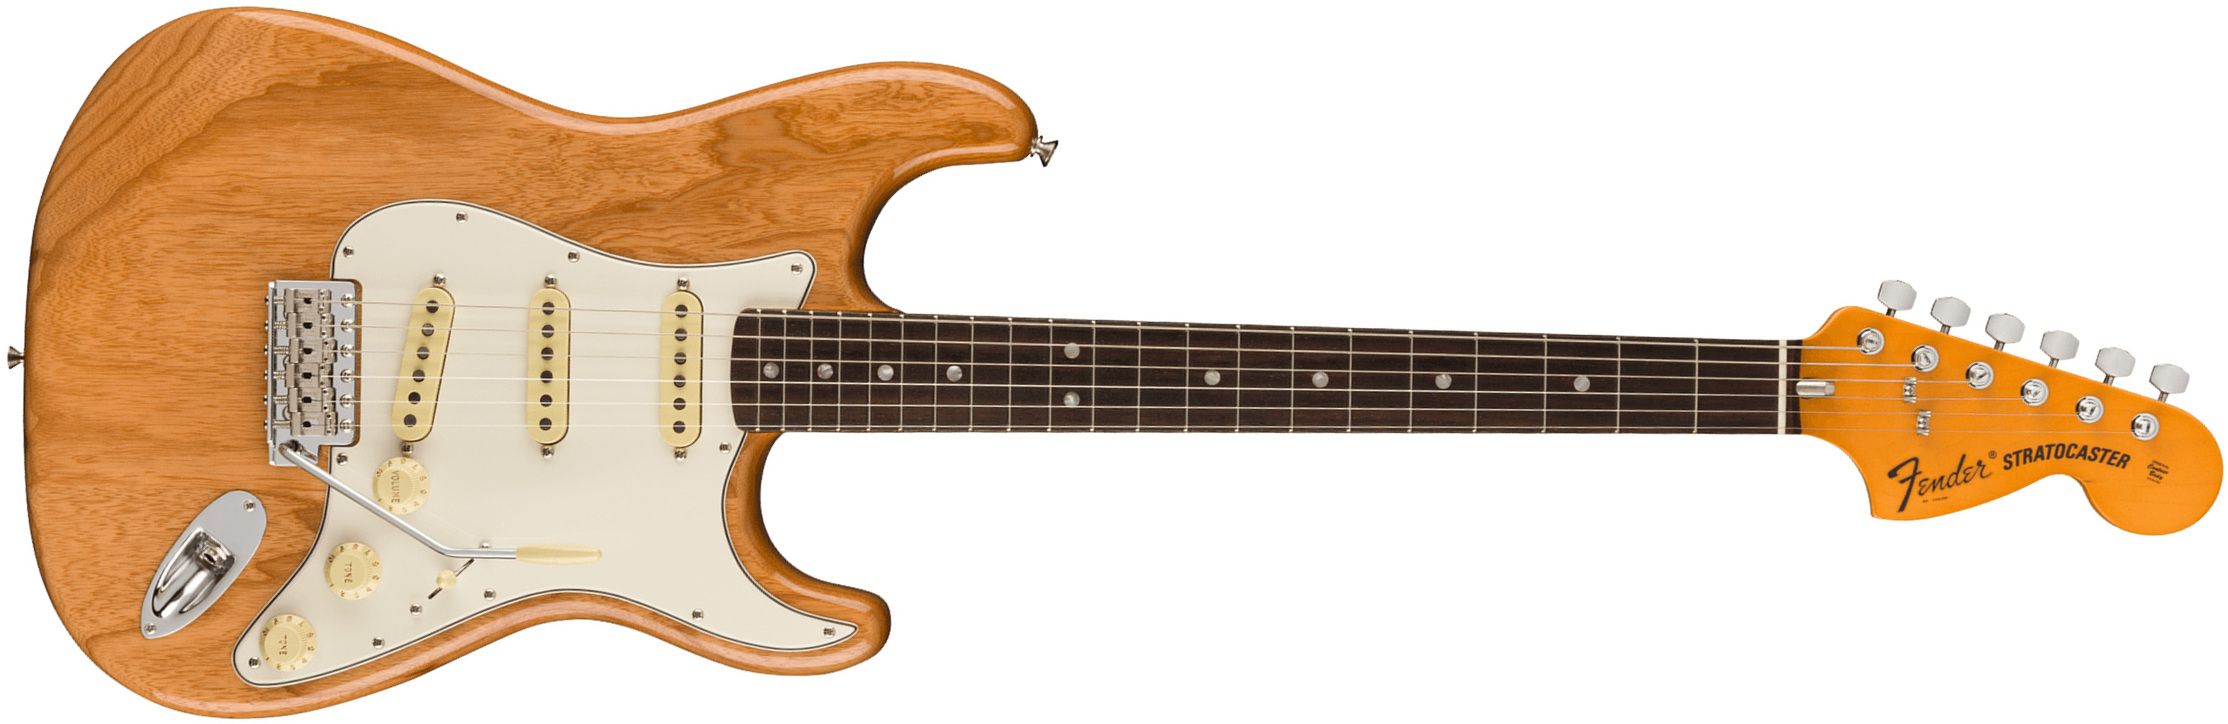 Fender Strat 1973 American Vintage Ii Usa 3s Trem Rw - Aged Natural - E-Gitarre in Str-Form - Main picture